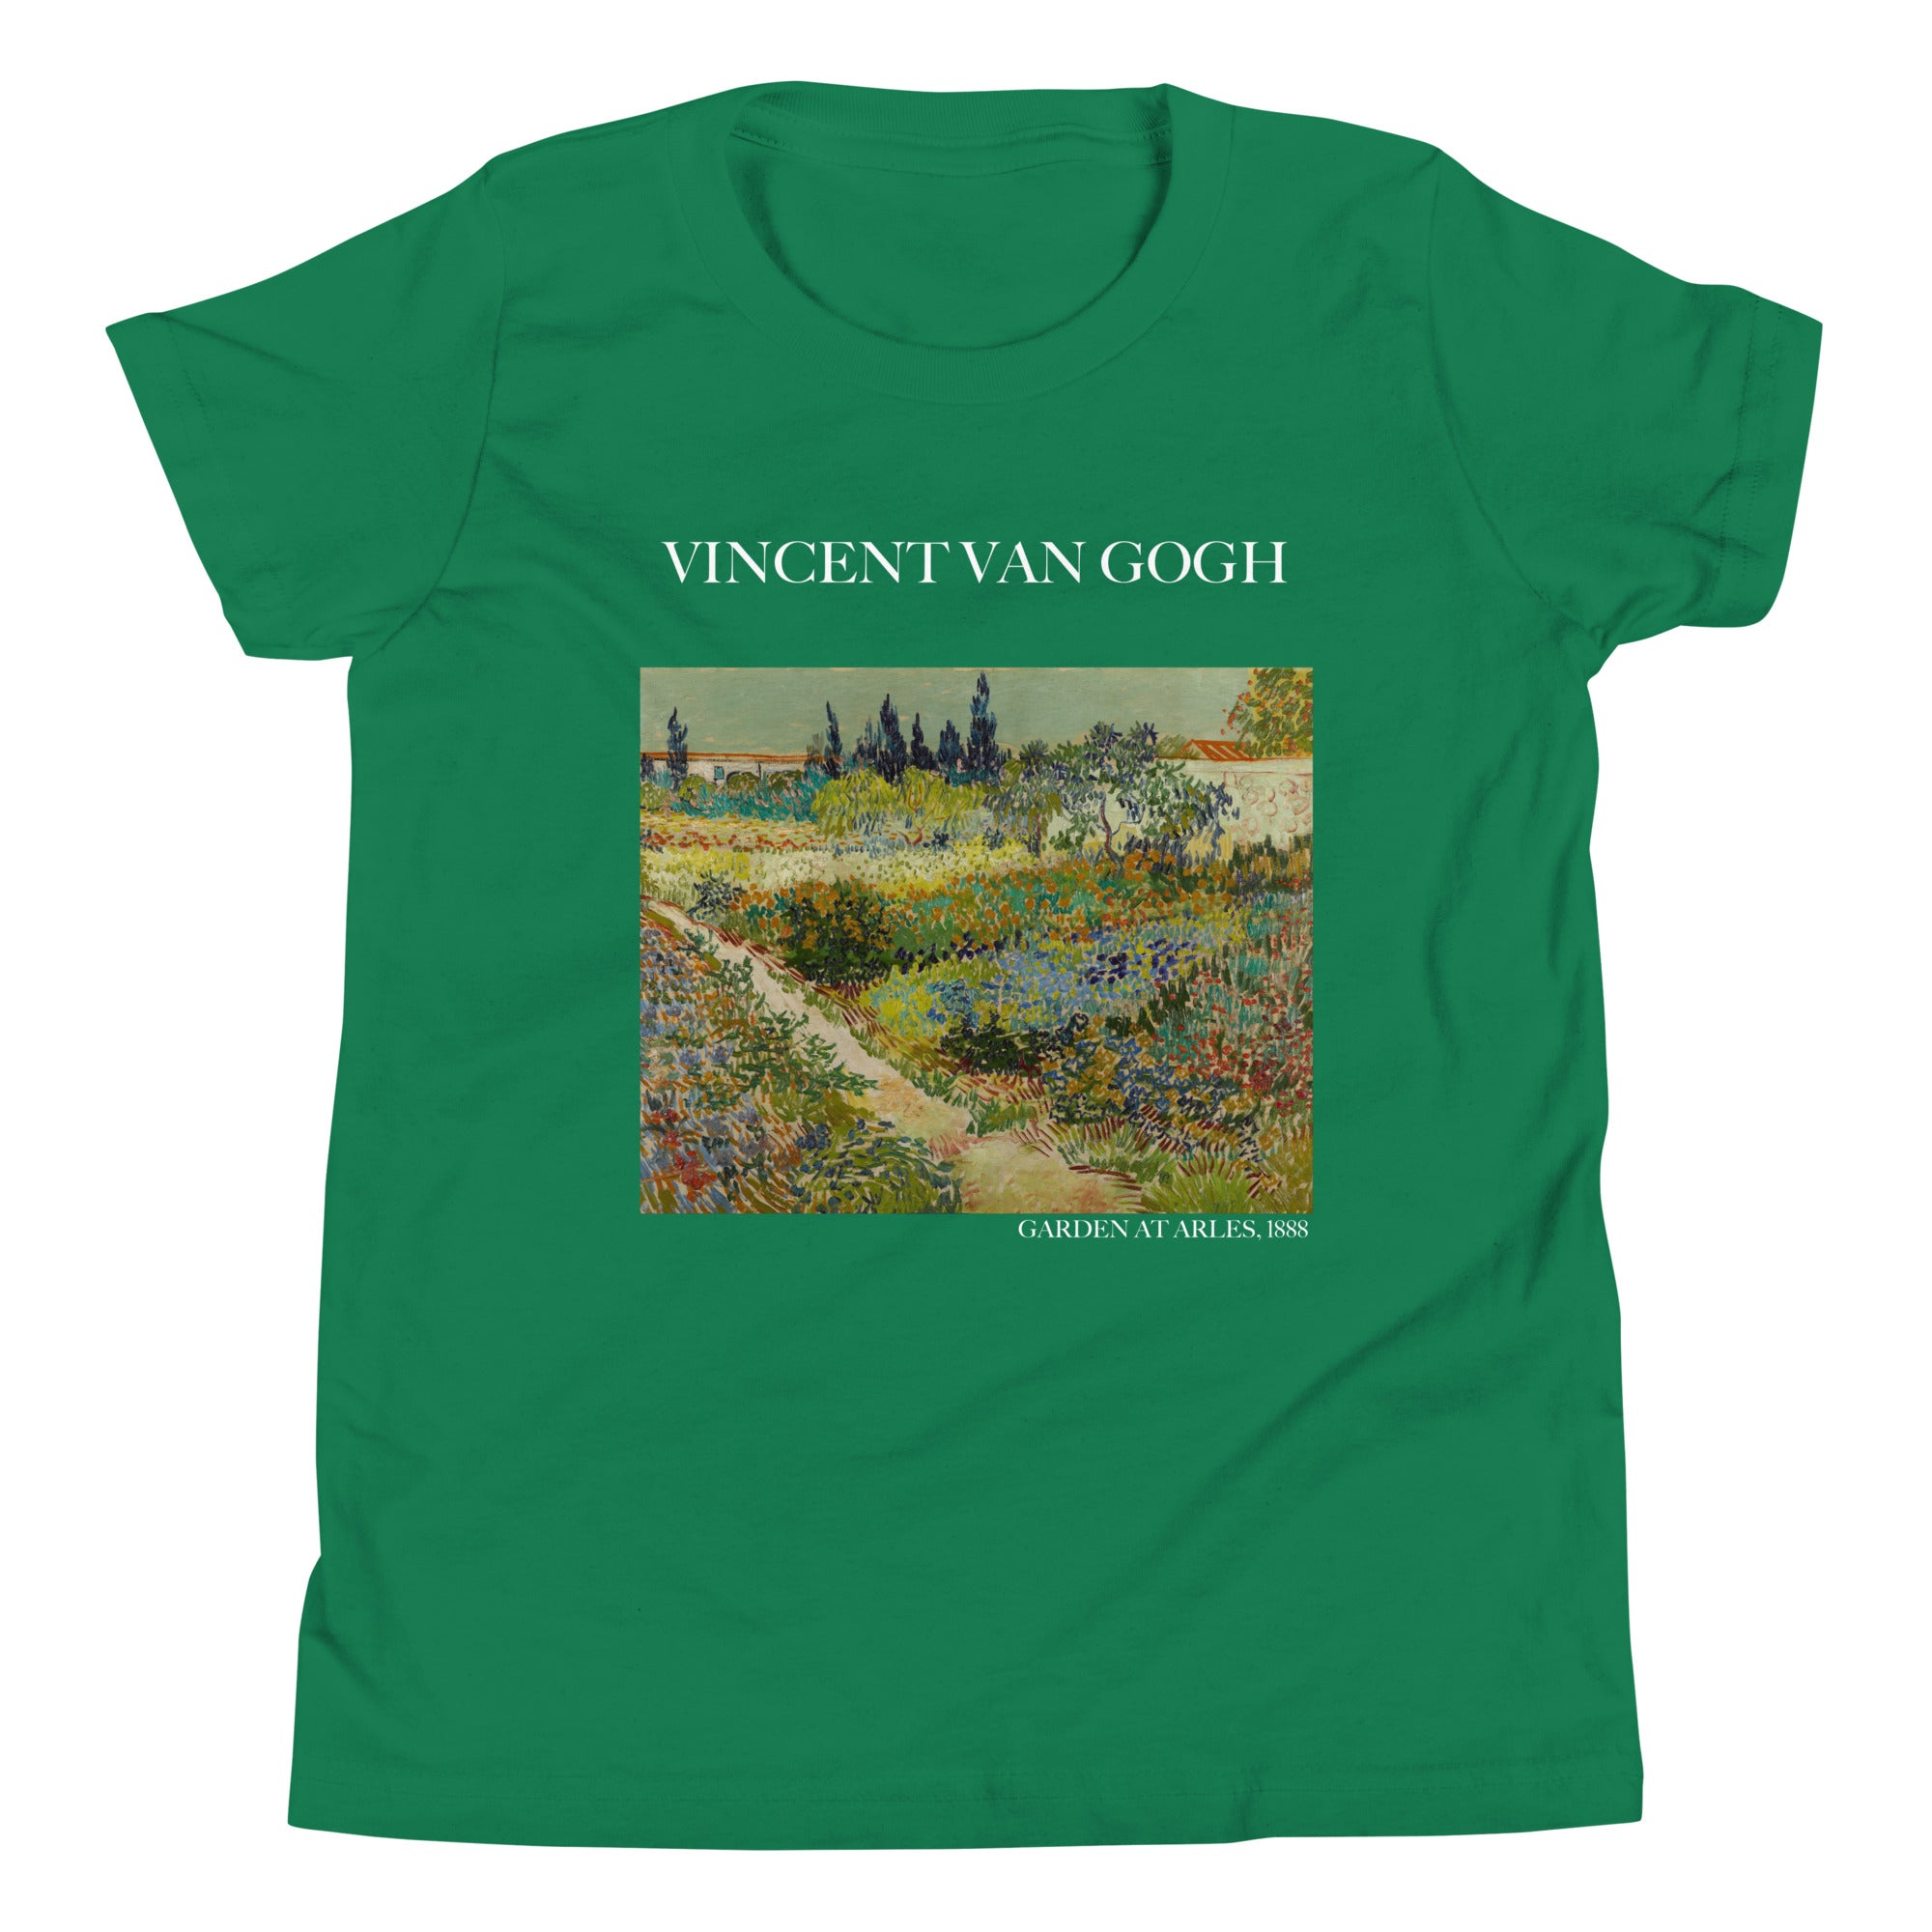 Vincent van Gogh 'Garden at Arles' Famous Painting Short Sleeve T-Shirt | Premium Youth Art Tee